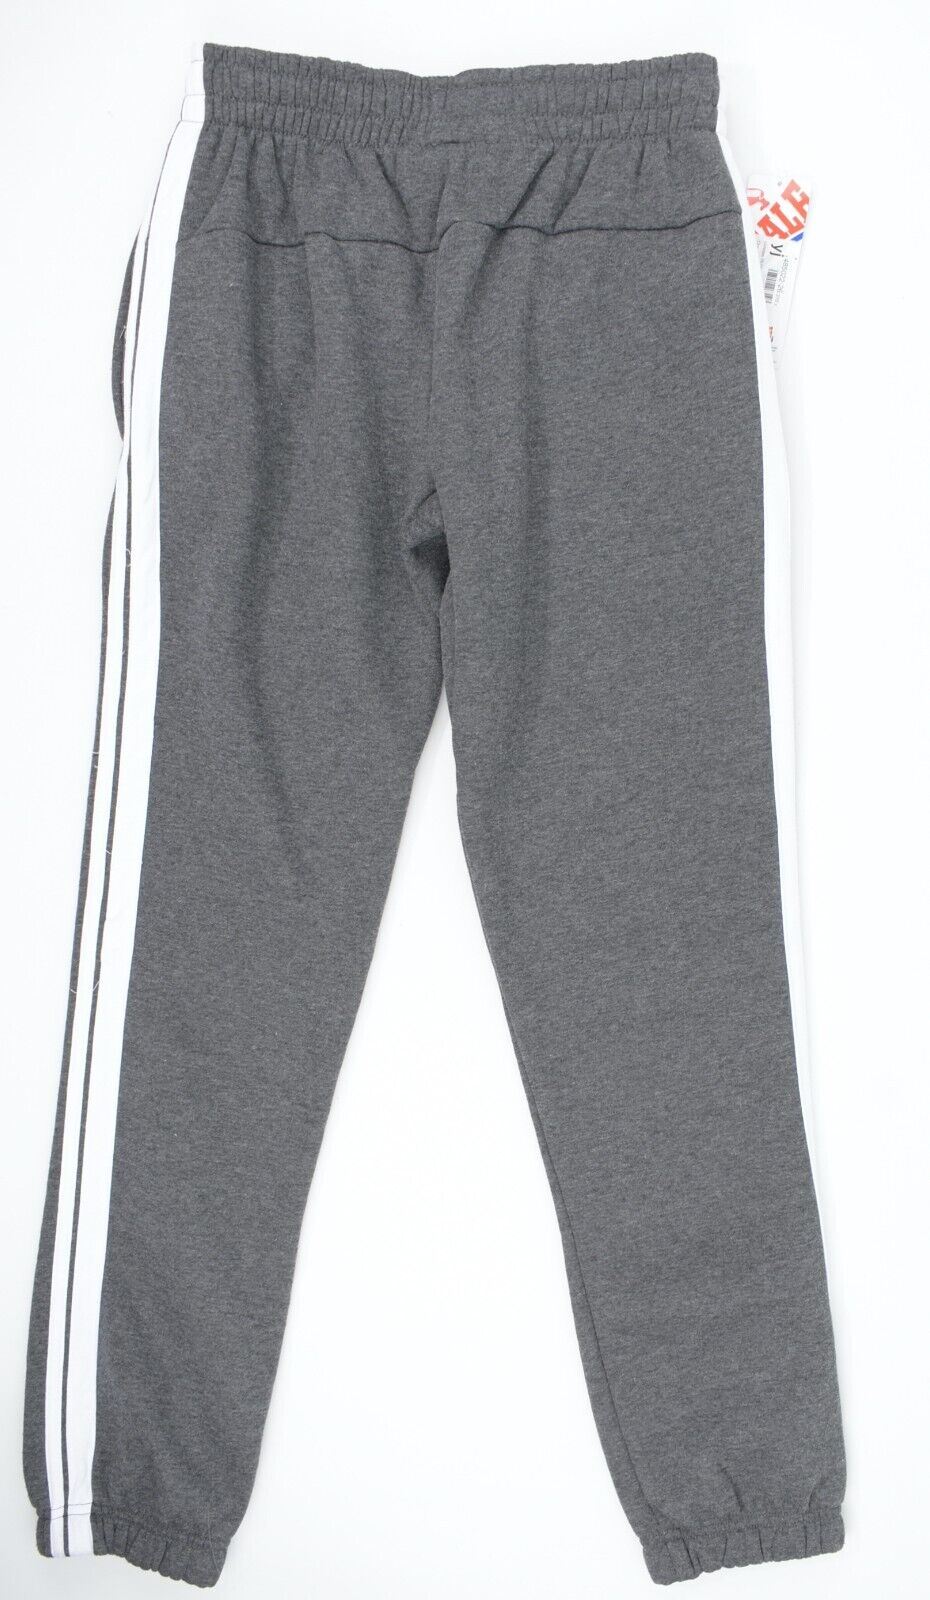 LONSDALE Men's Standard Fit Joggers, Cuffed Leg, Charcoal Grey/White, size XS